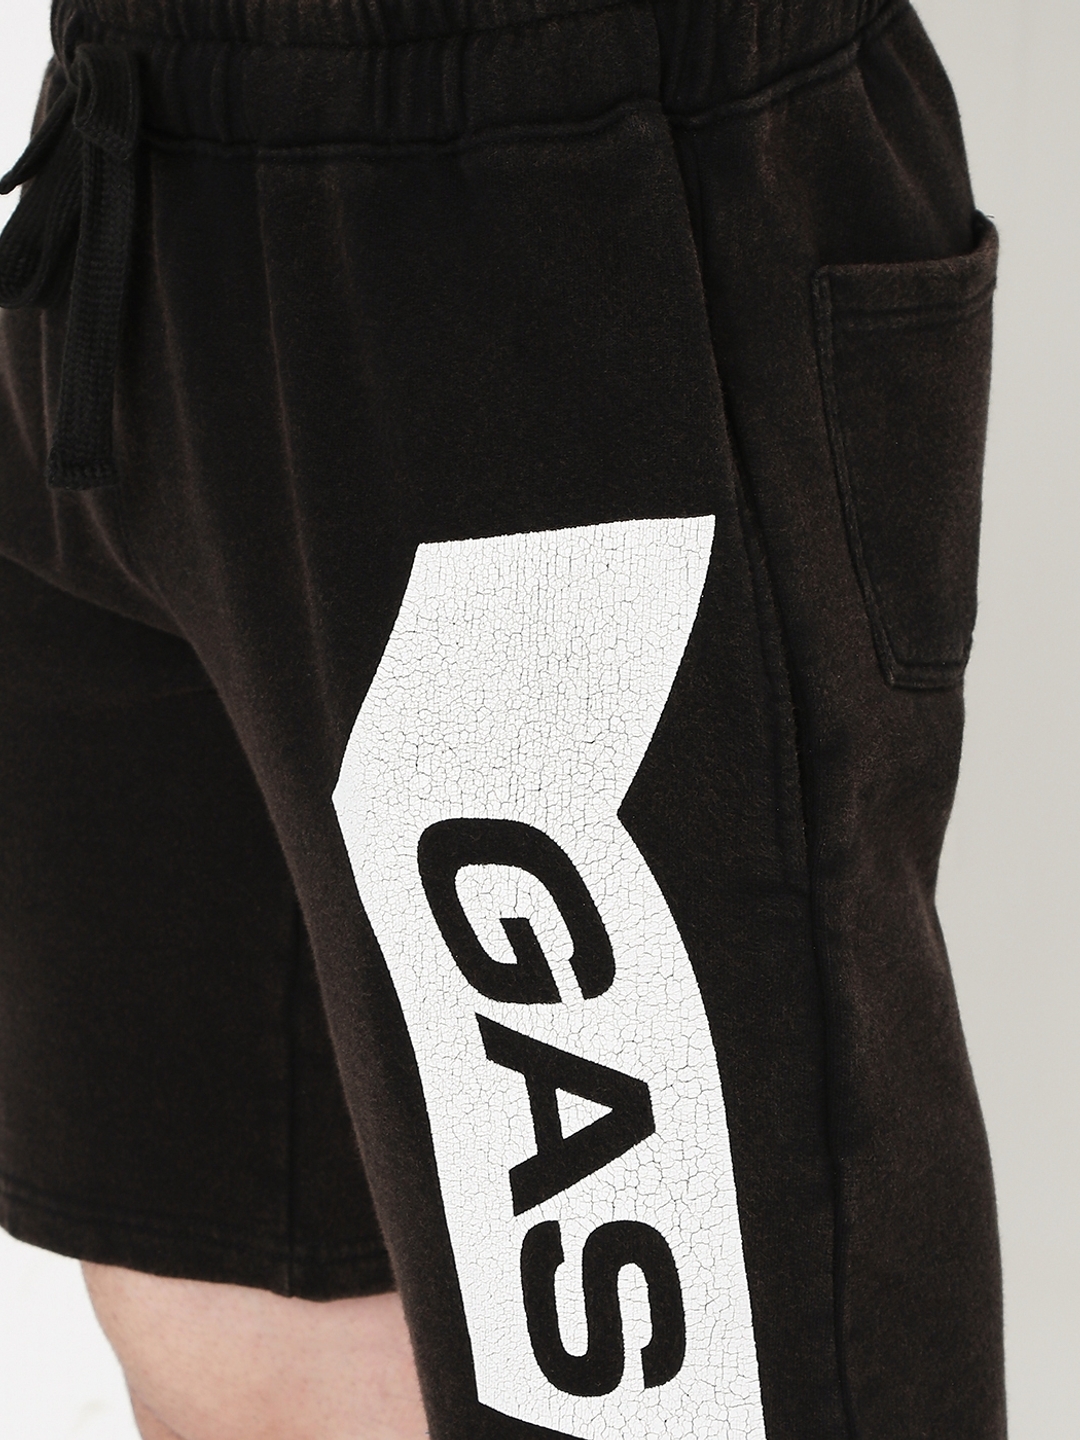 Men's Brand Print Drawstring Shorts with Insert Pockets